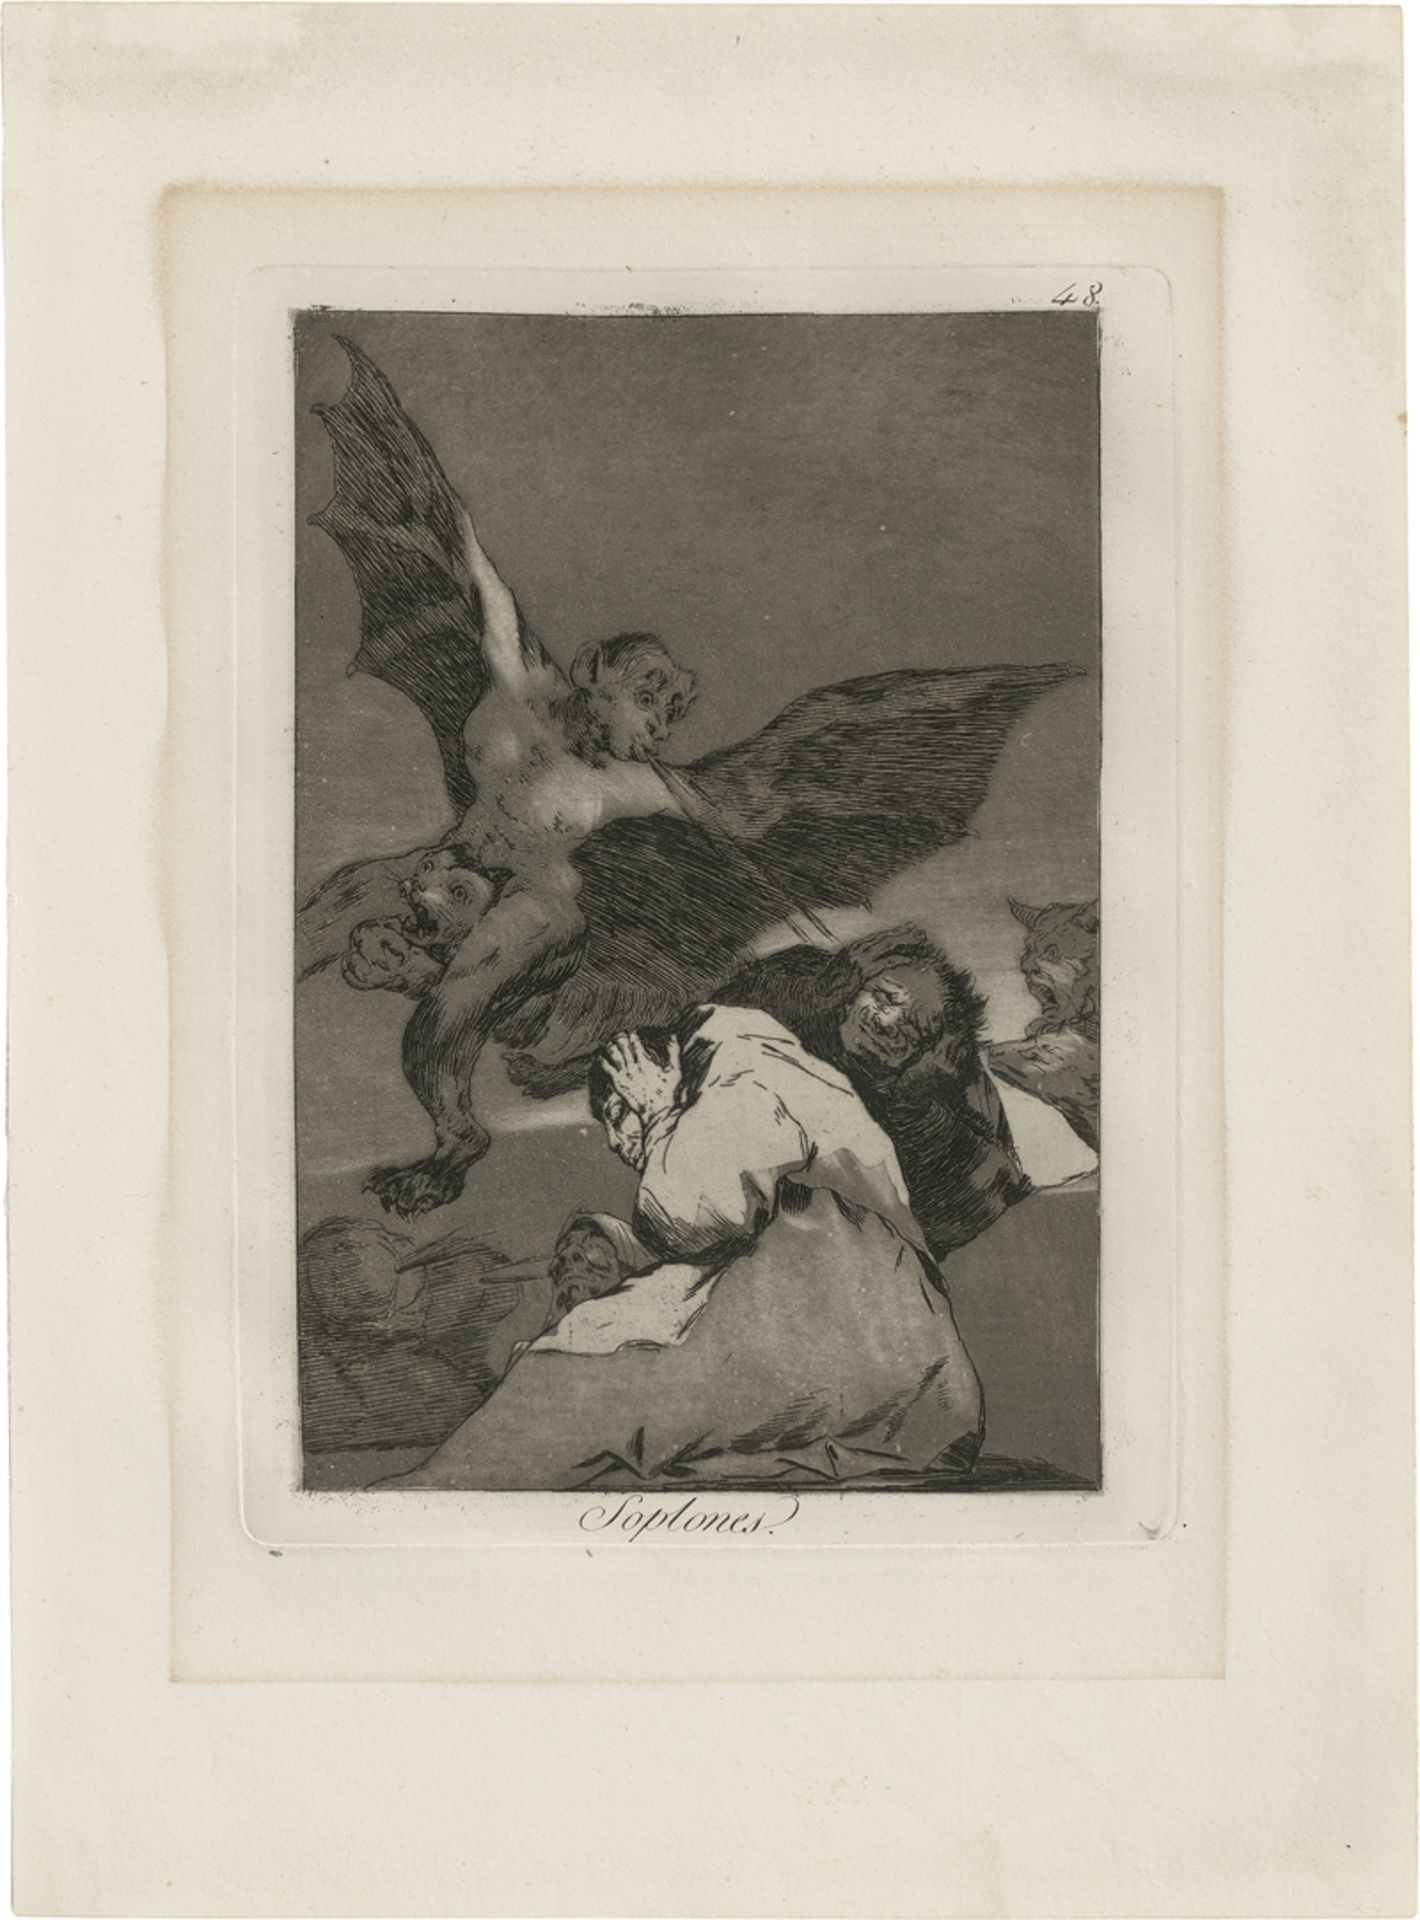 Goya, Francisco de: Soplones